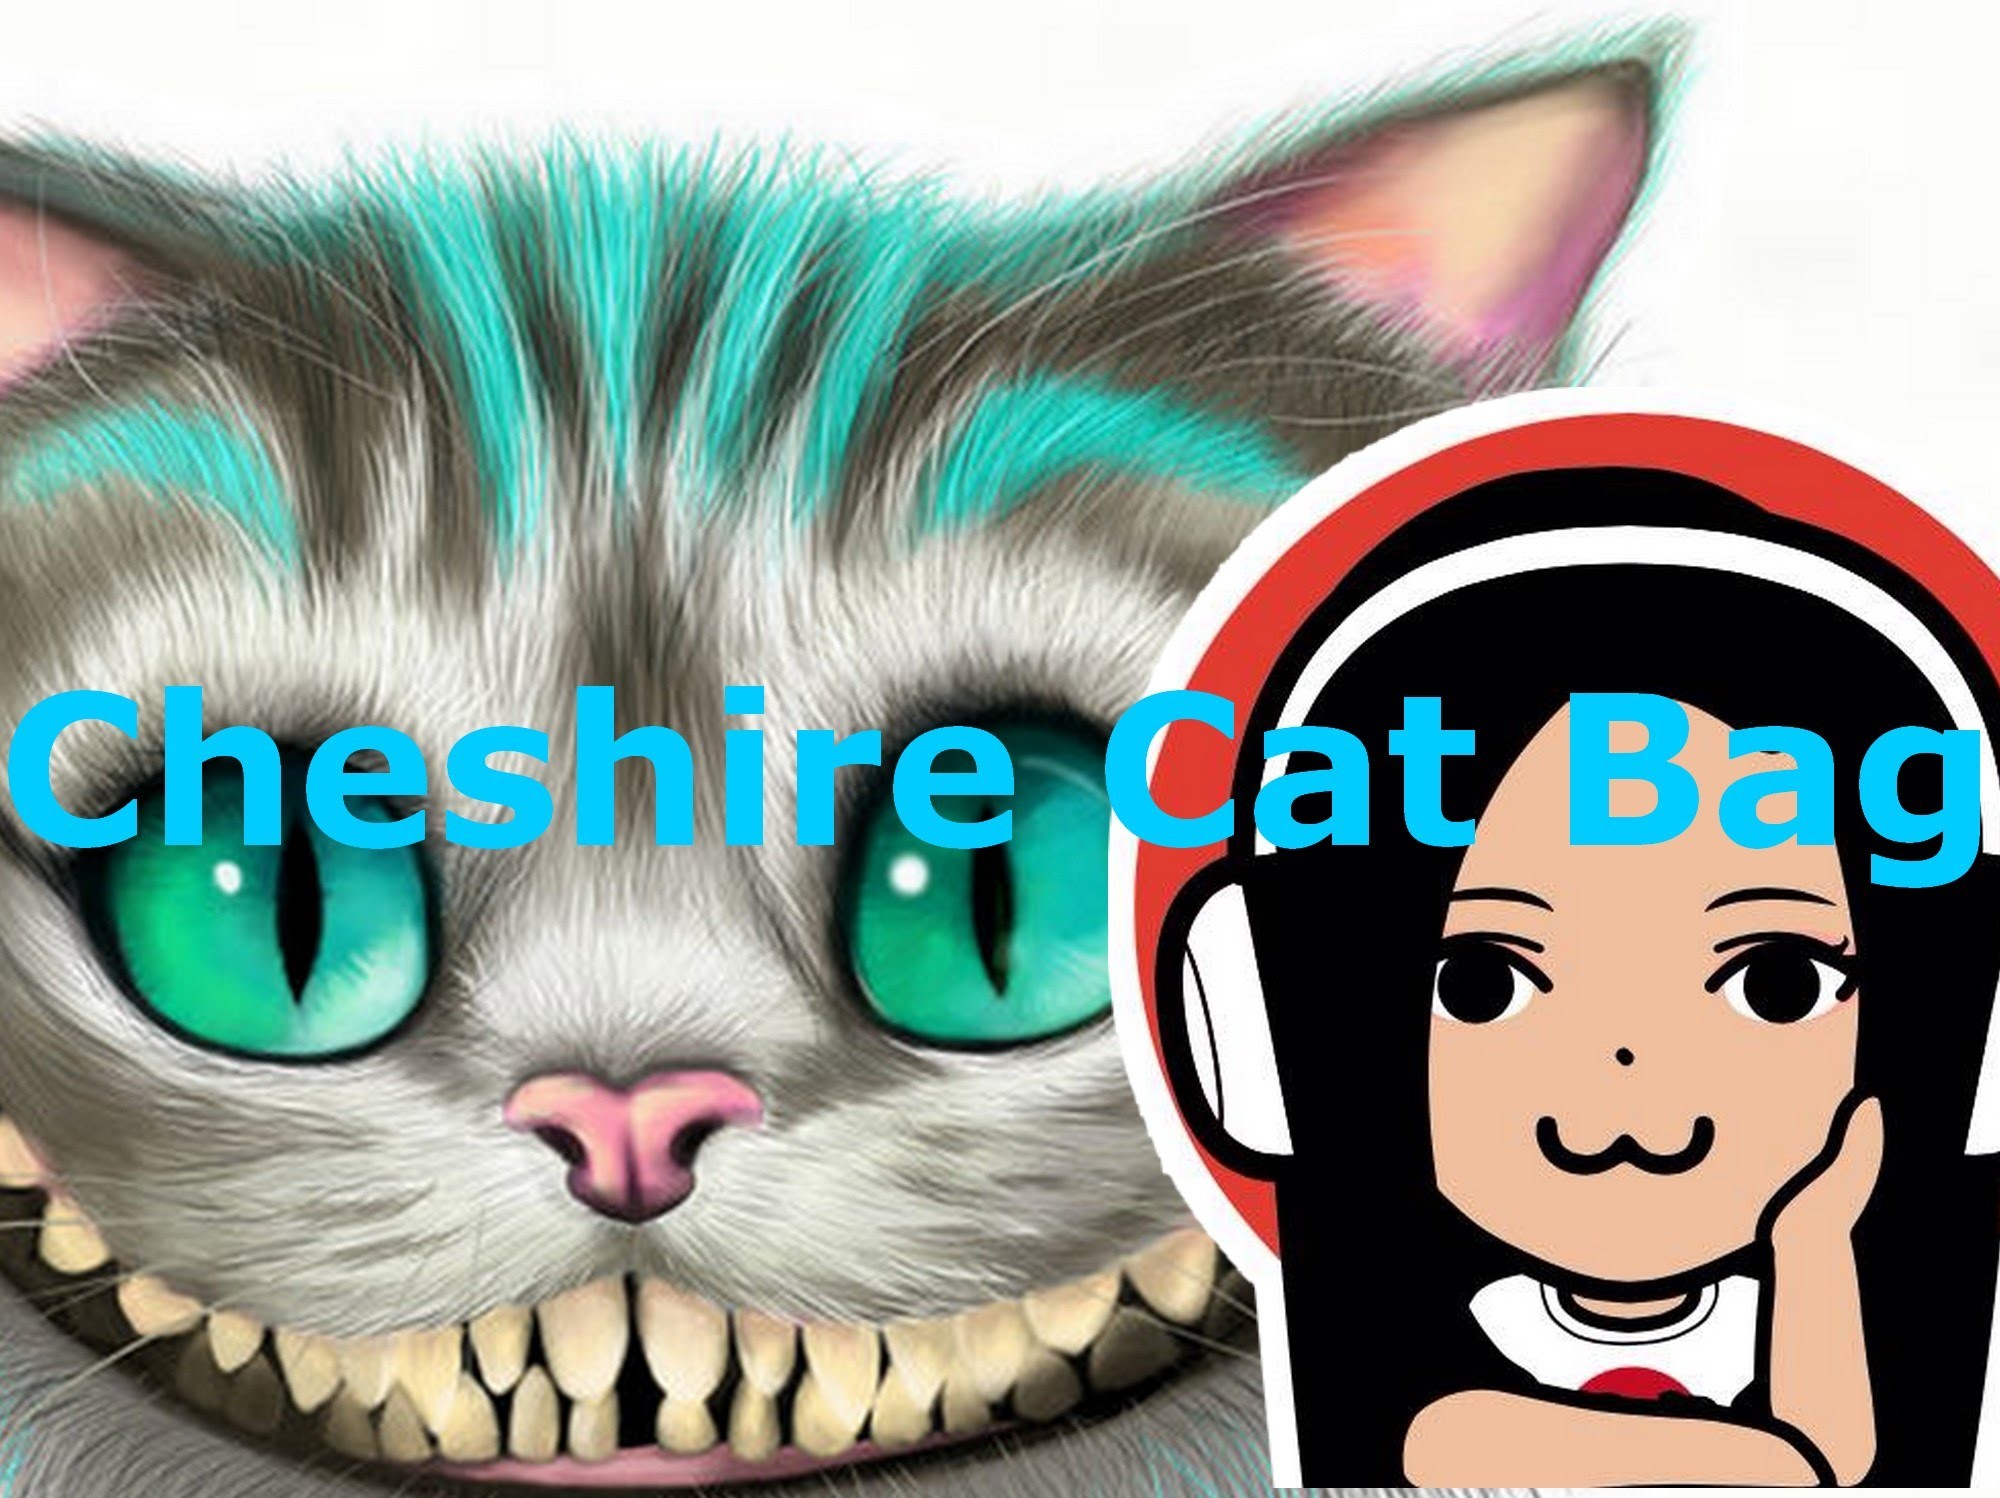 Do a Cheshire cat bag # 6